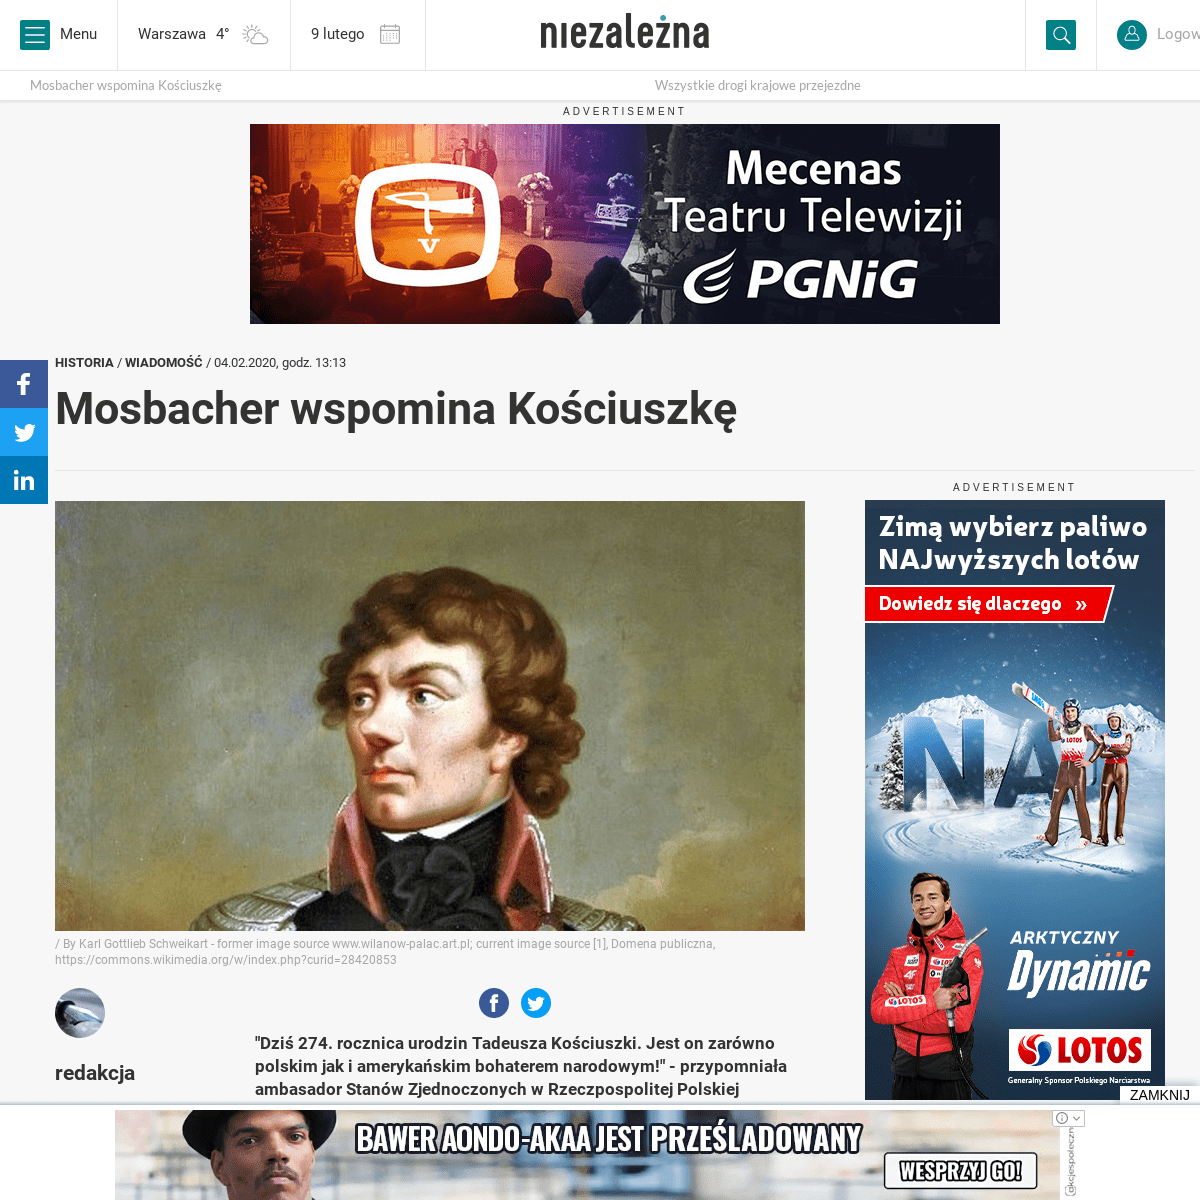 A complete backup of niezalezna.pl/309269-mosbacher-wspomina-kosciuszke